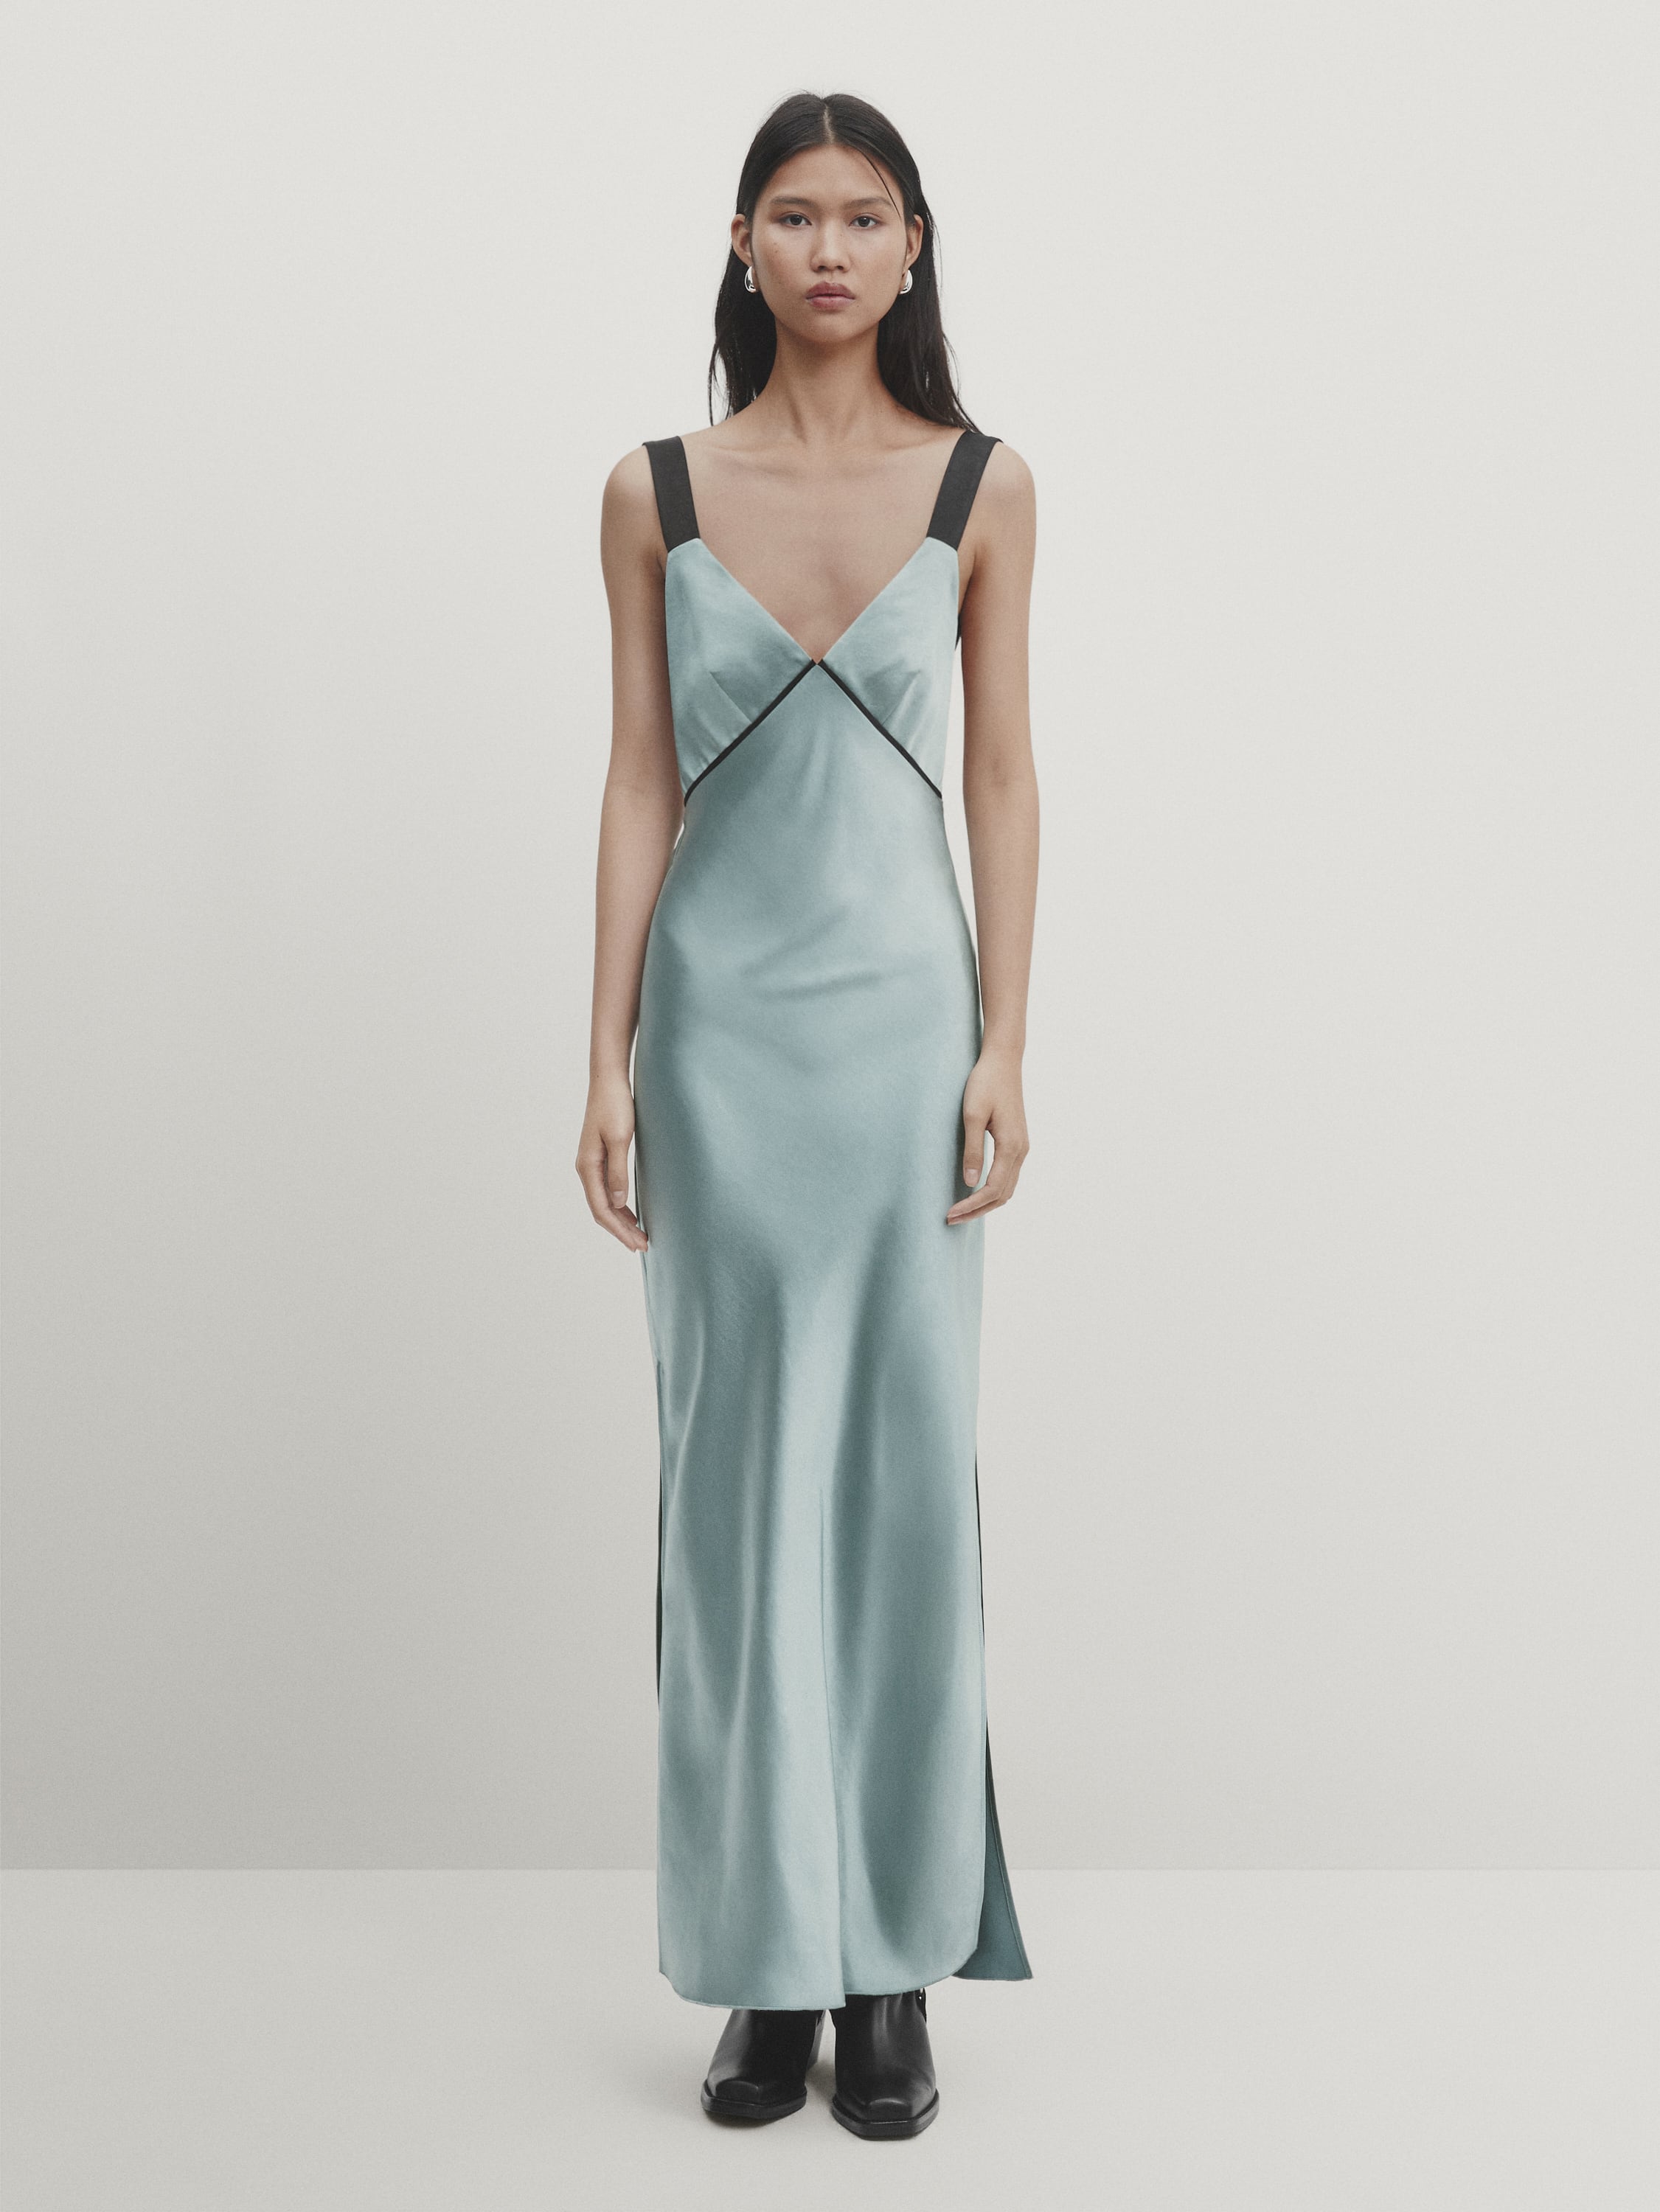 Satin dress with contrast details - Studio